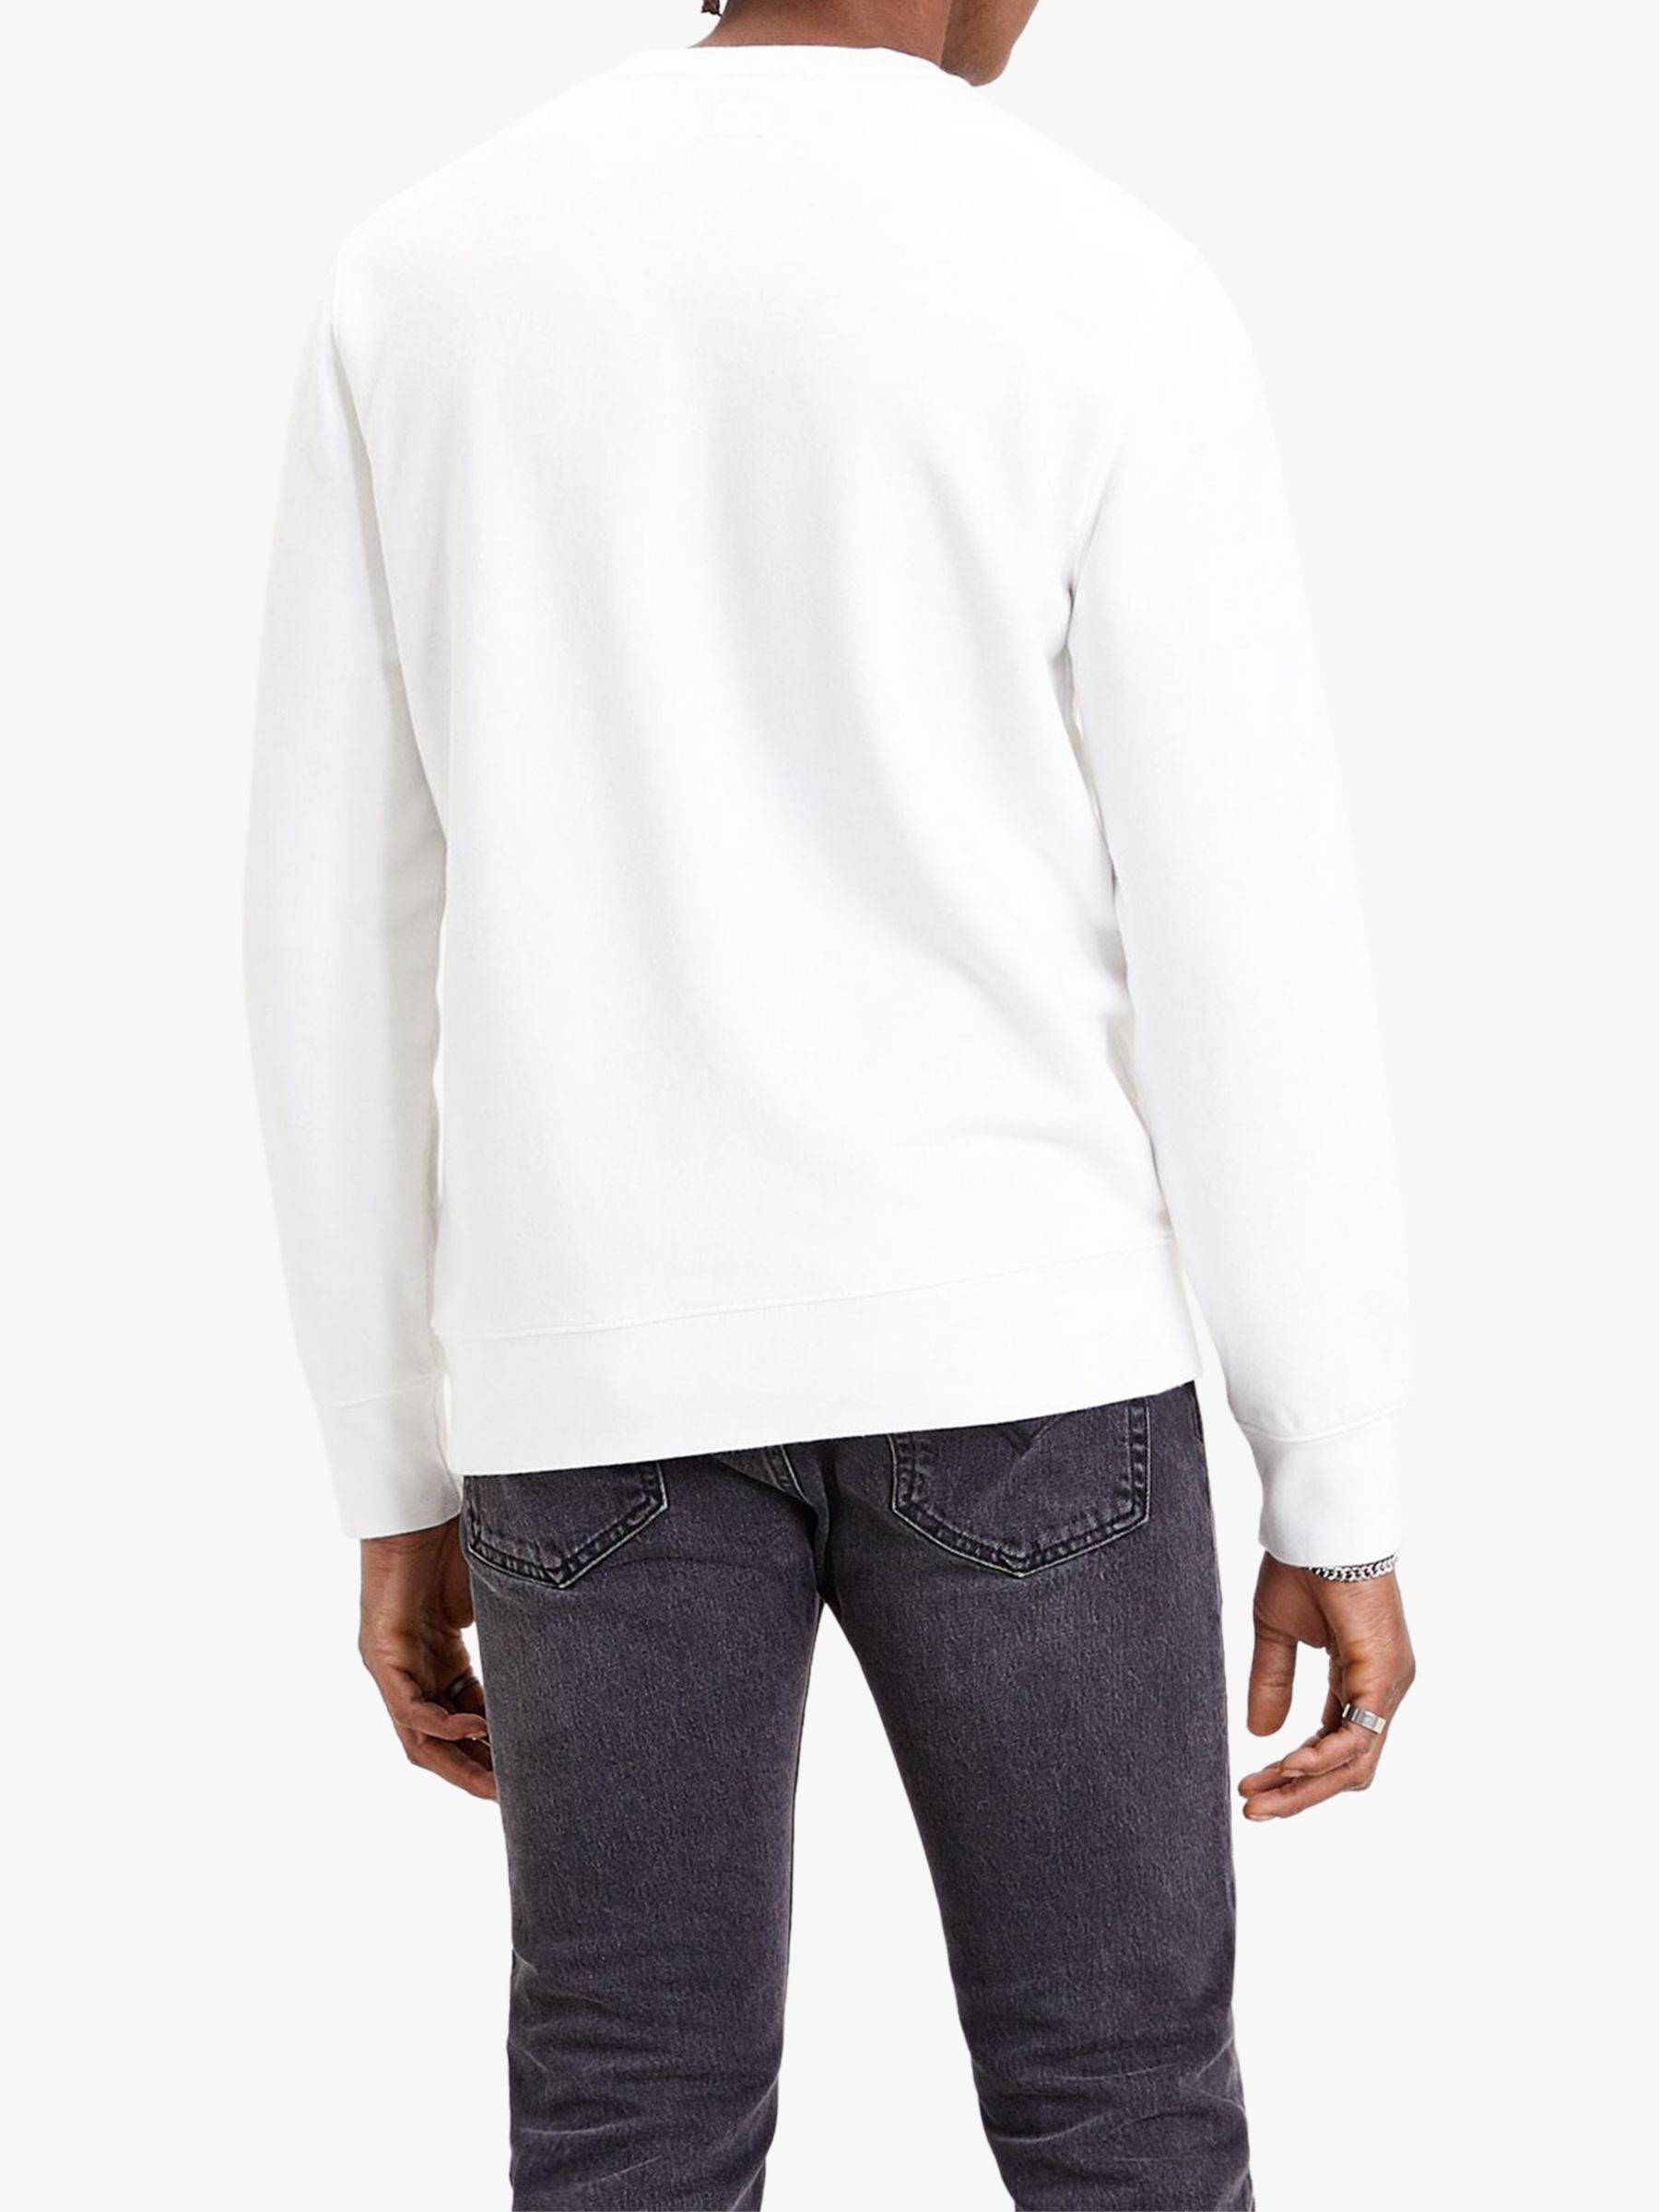 Levi's Original Crew Neck Sweatshirt, White, S